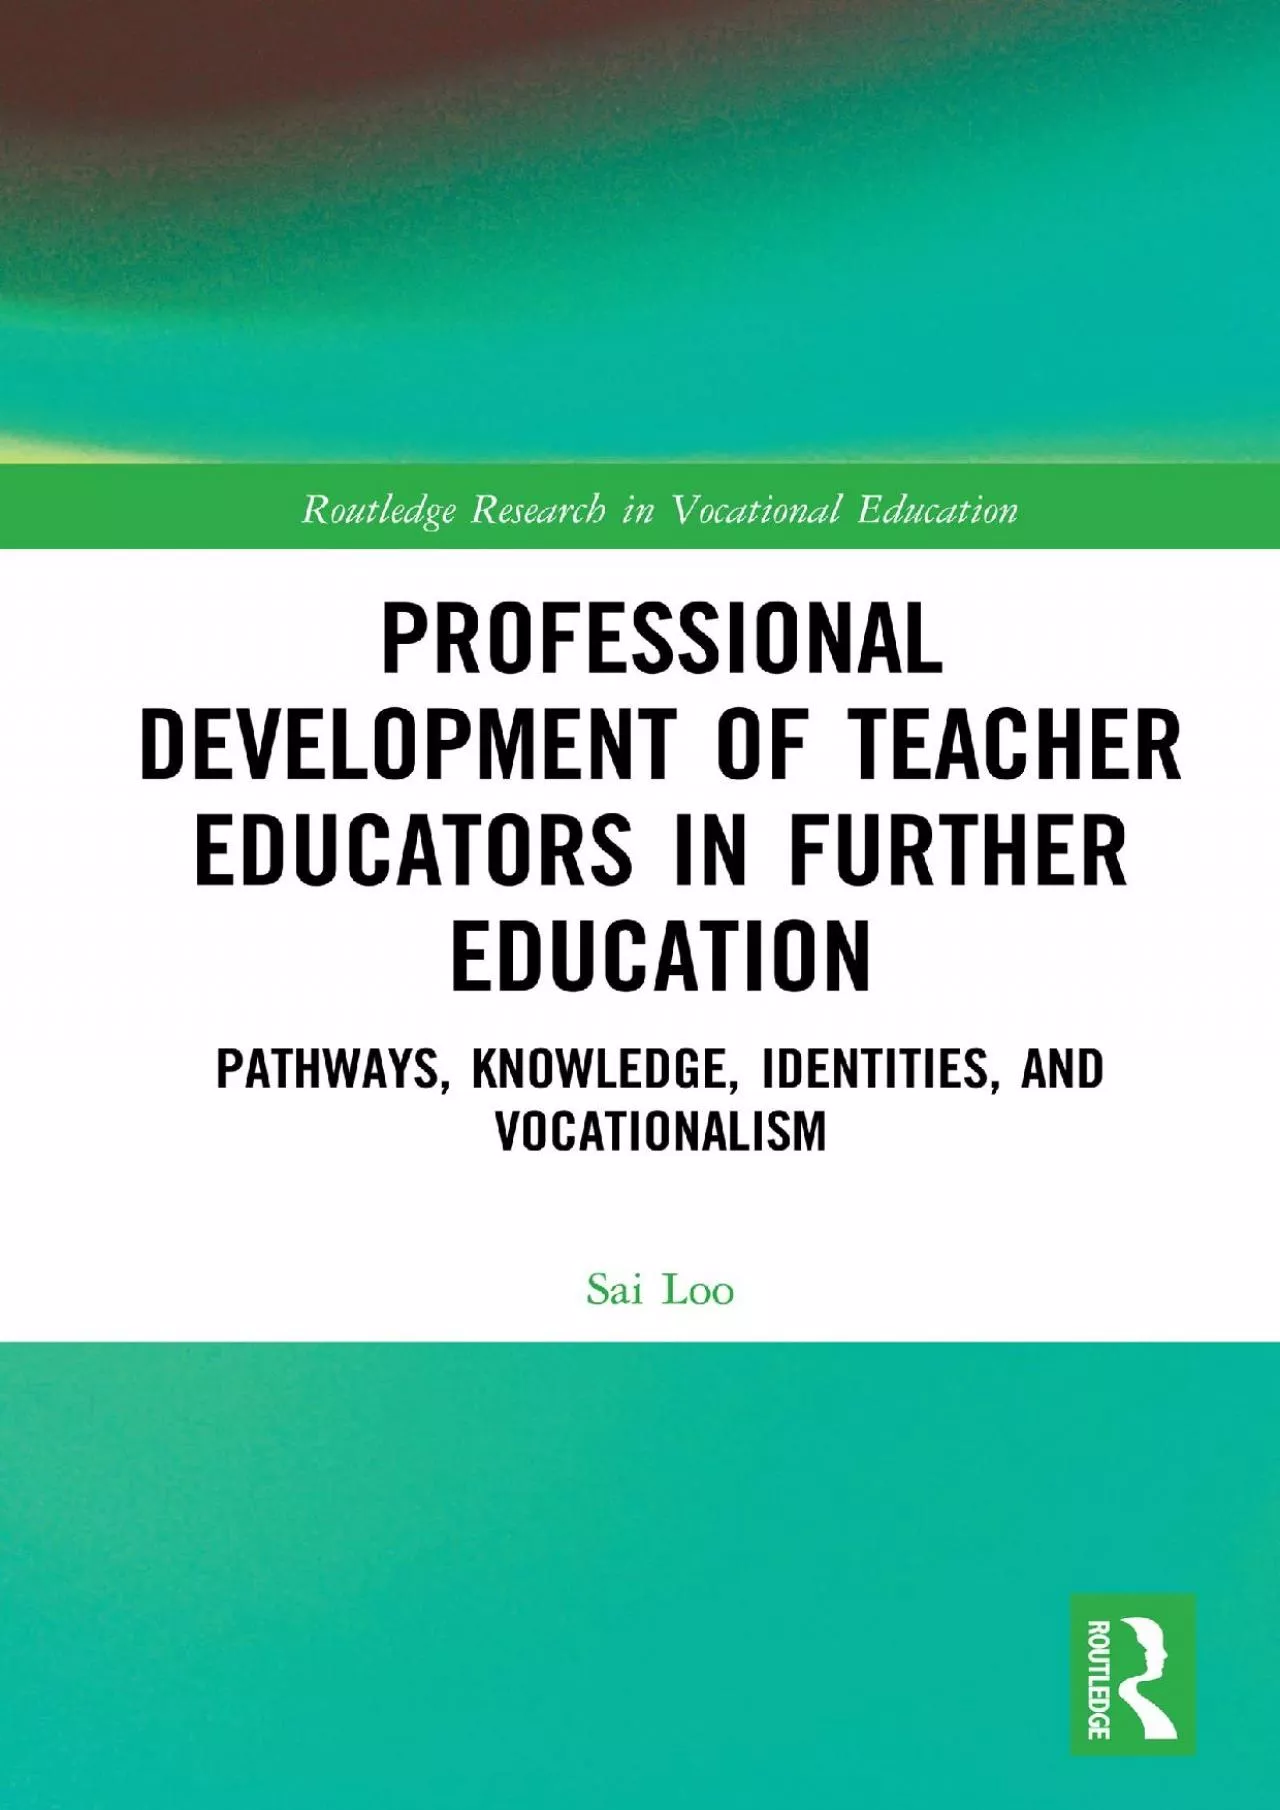 [DOWNLOAD] Professional Development of Teacher Educators in Further Education: Pathways,